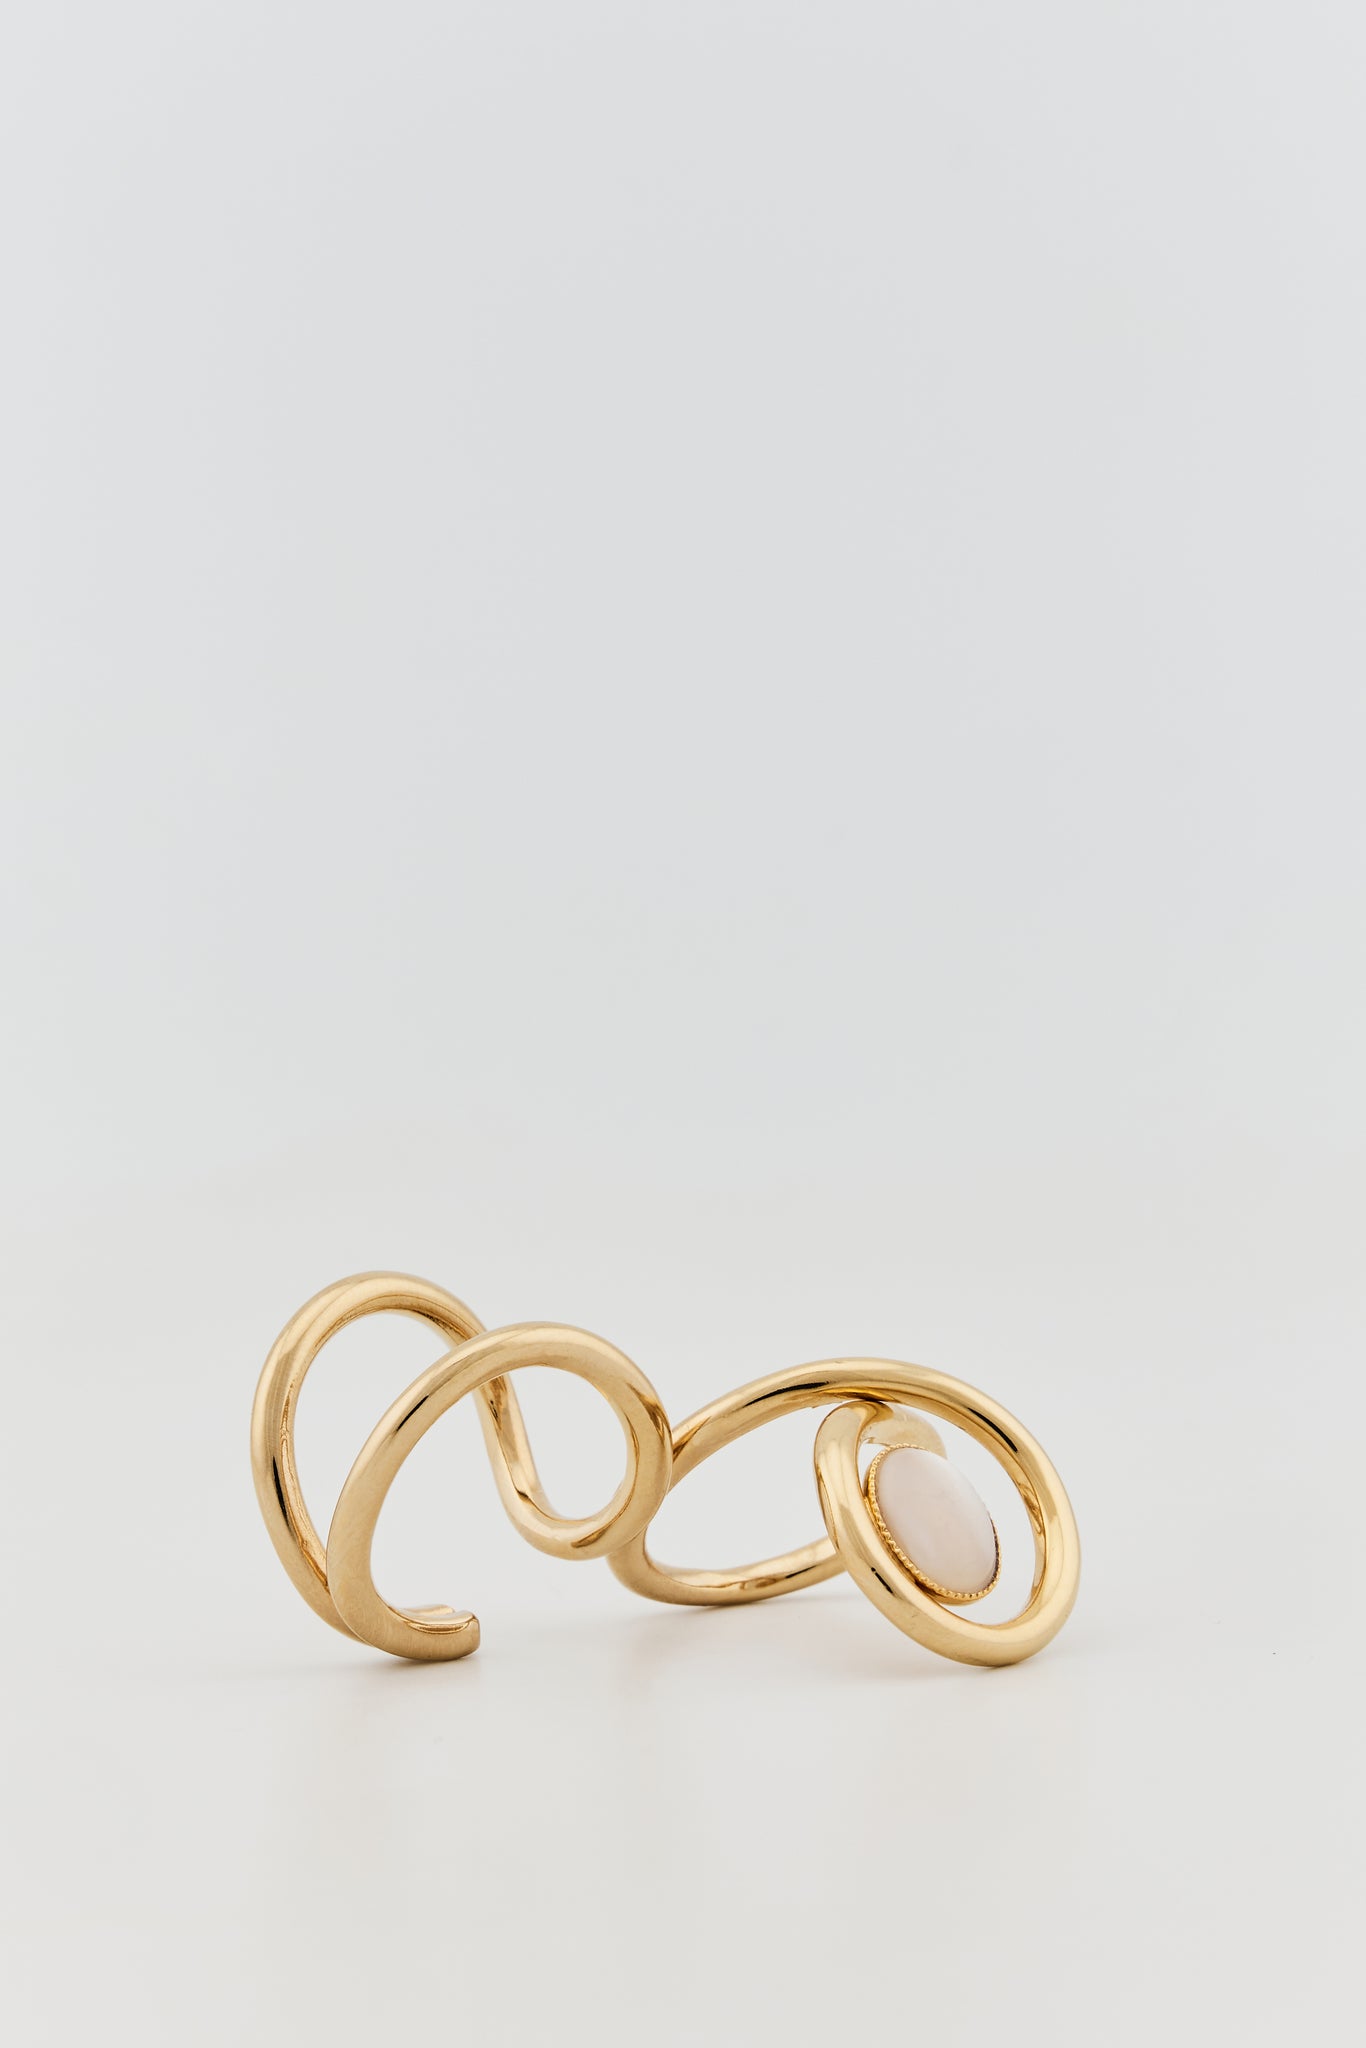 Louise Gold-Plated & Dalmatian Jasper Ring